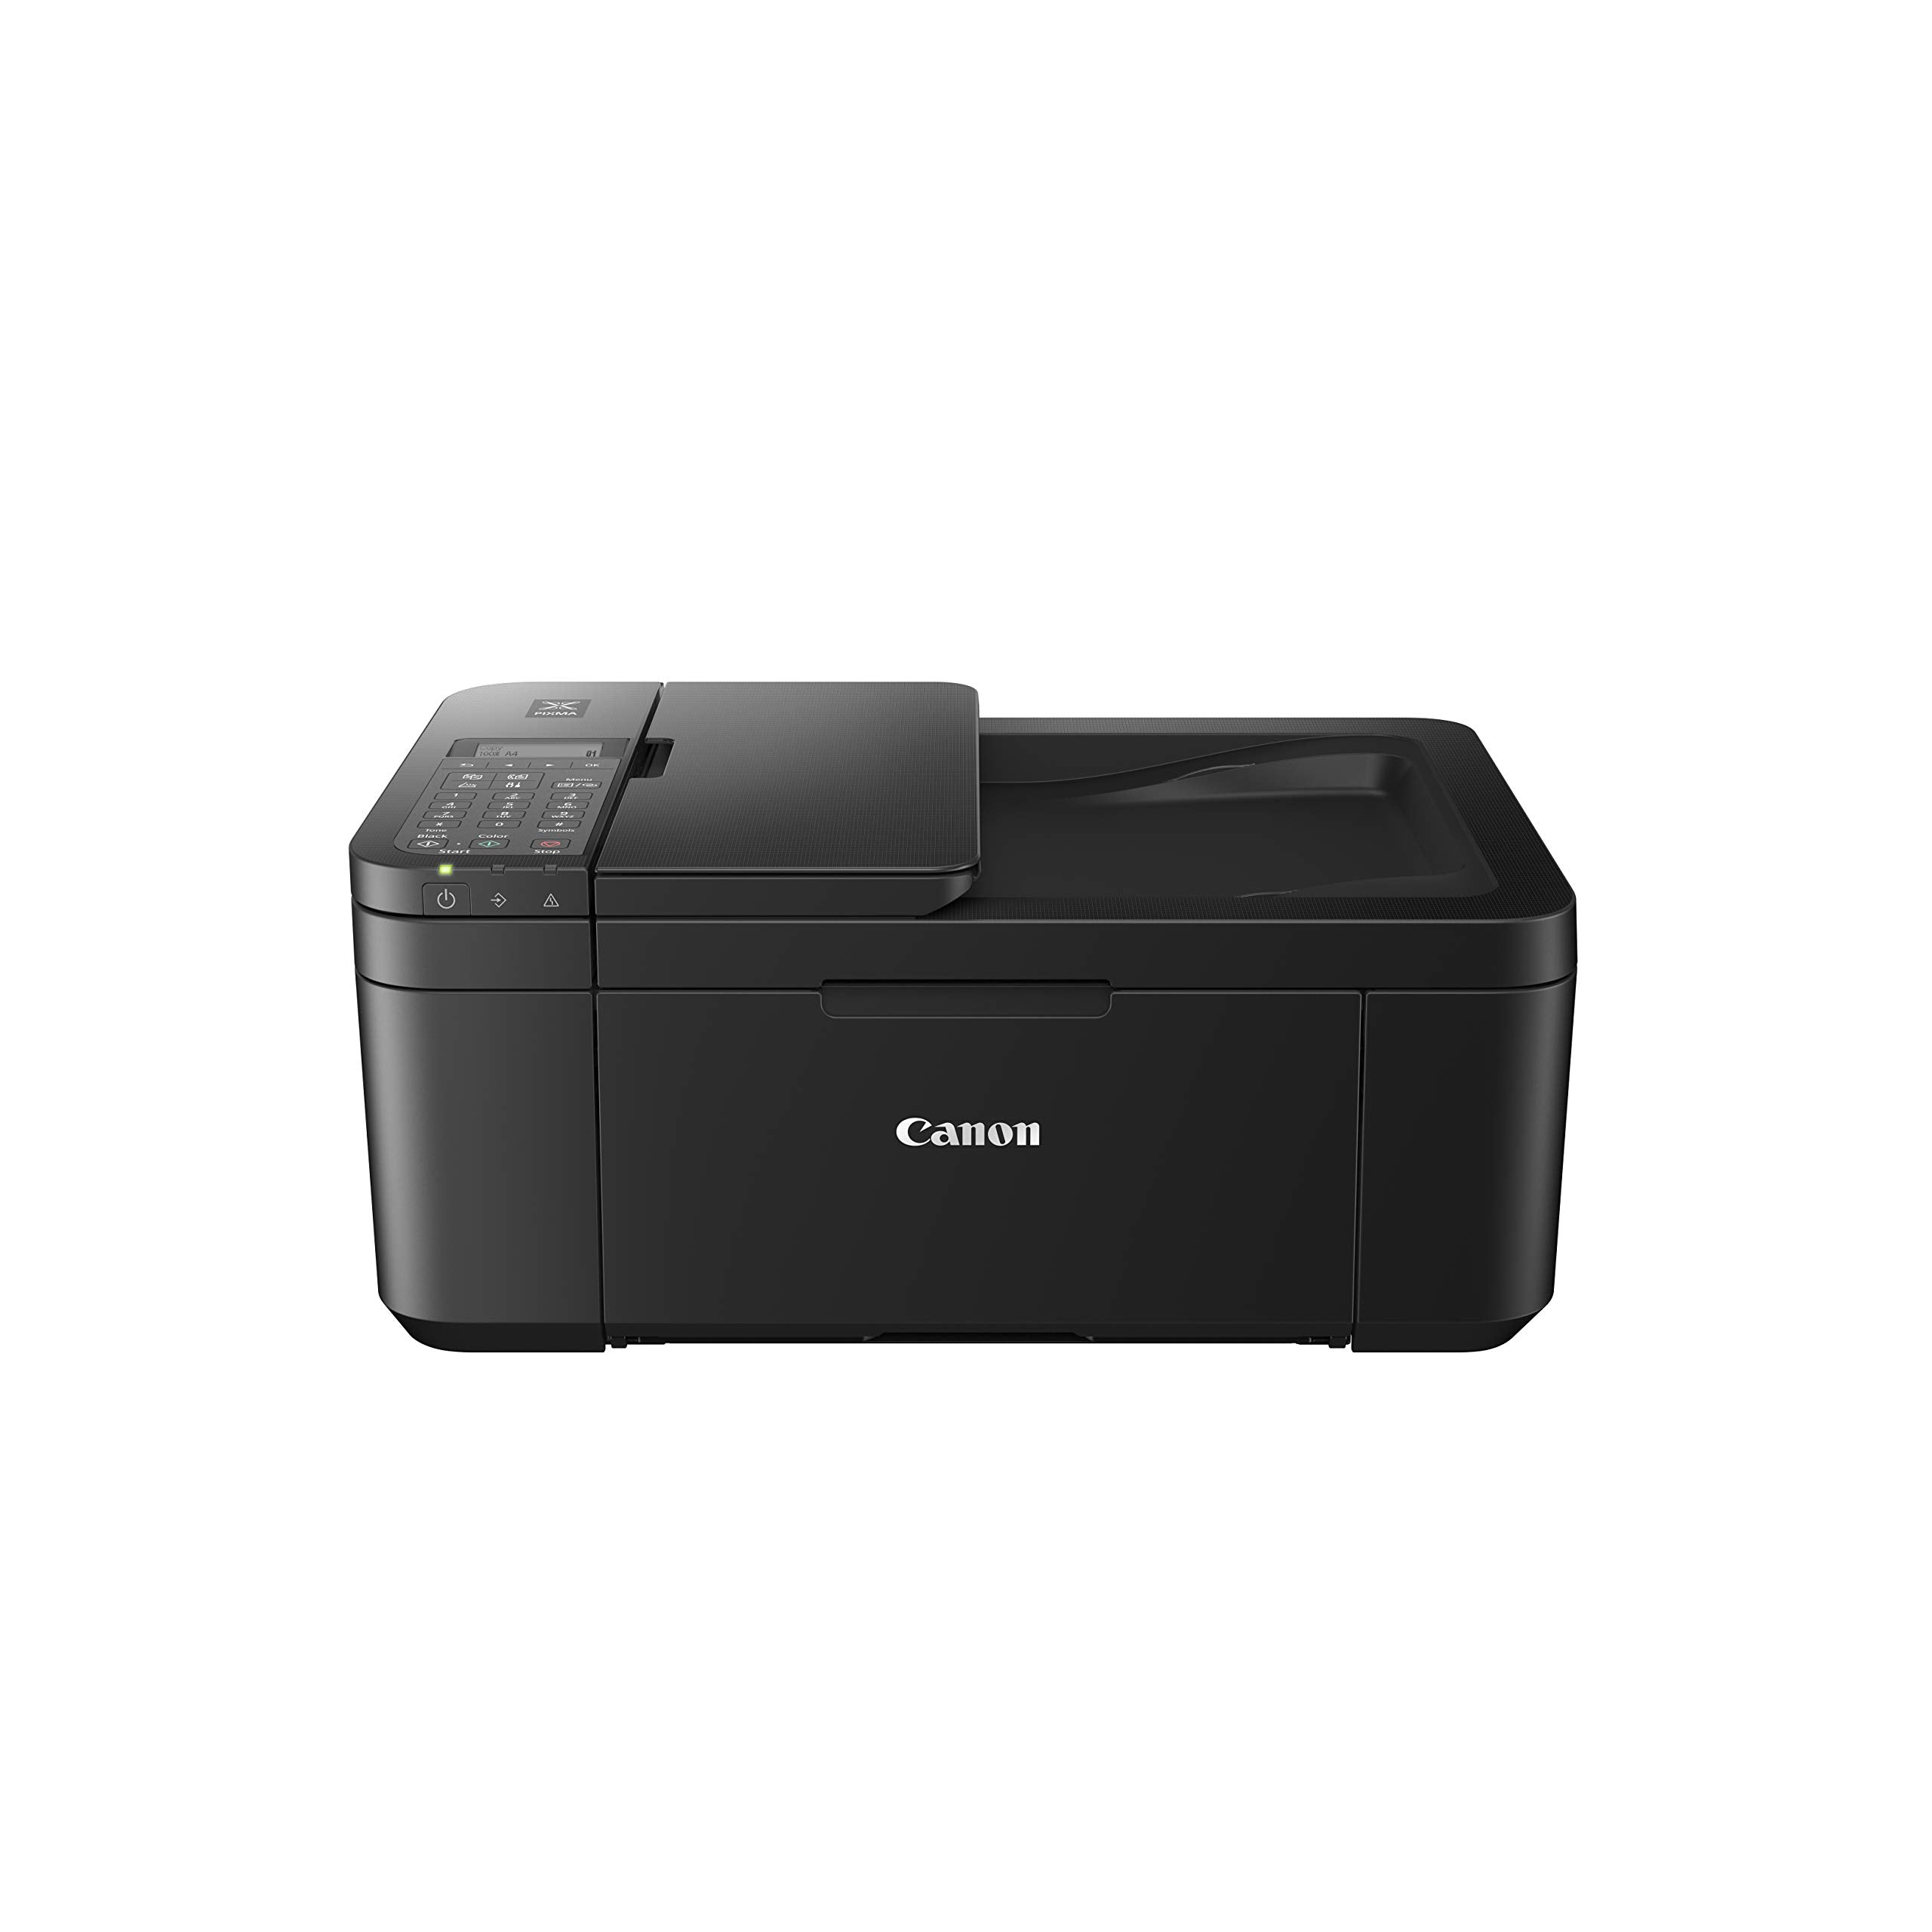 Canon PIXMA TR4527 Wireless Color Photo Printer with Scanner, Copier & Fax, Black  - Like New